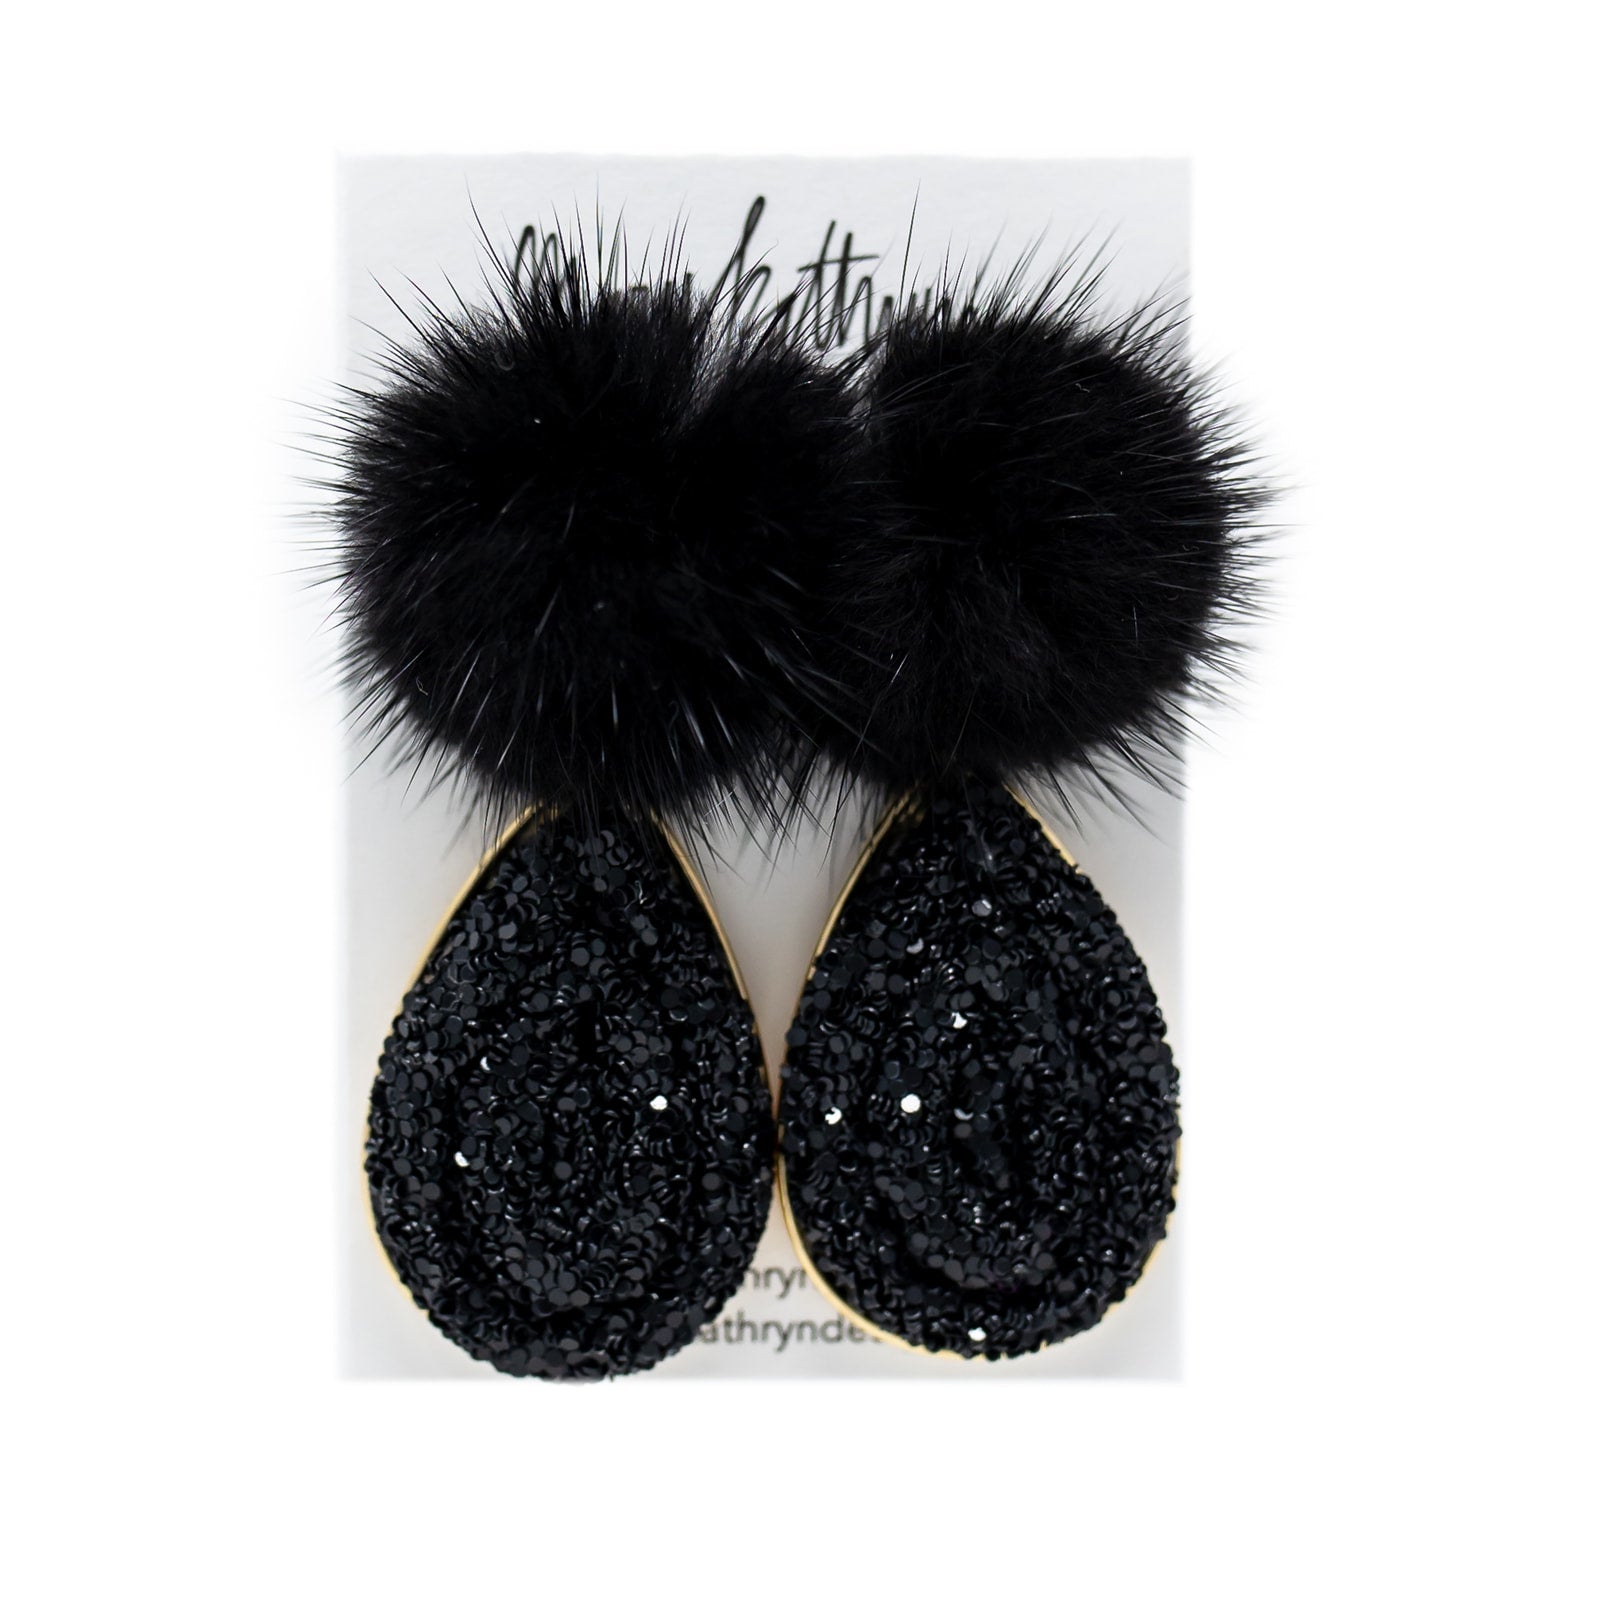 Black Lacey Puff Earrings